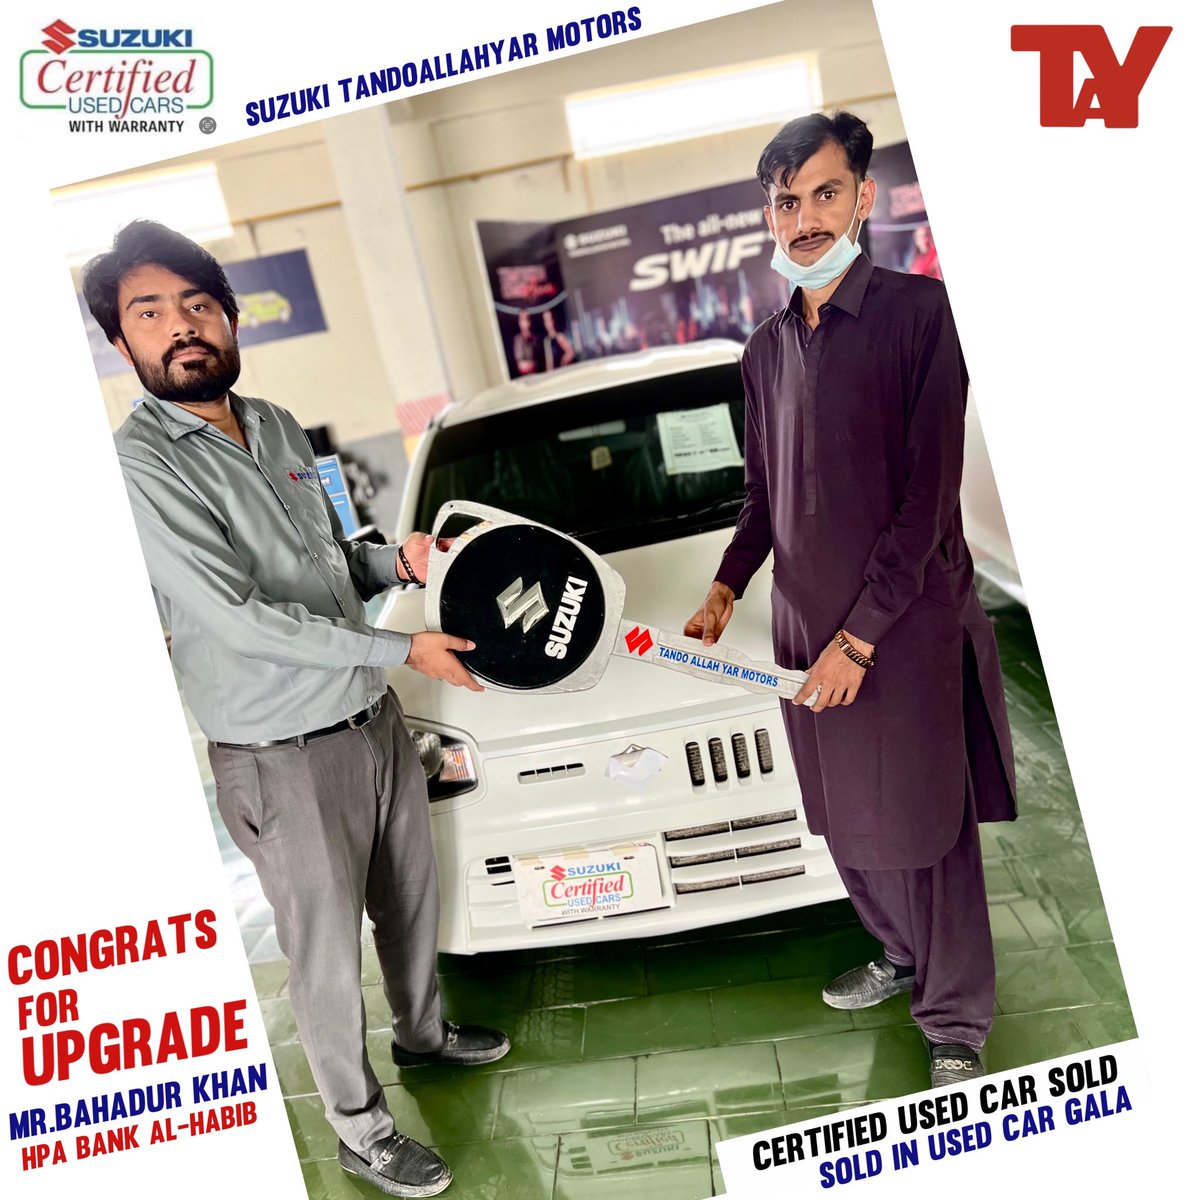 Congratulations to Mr.Bahadur khan for certified used car with warranty #suzukitandoallahyarmotors #certifiedusedcars #suzukipakaitan